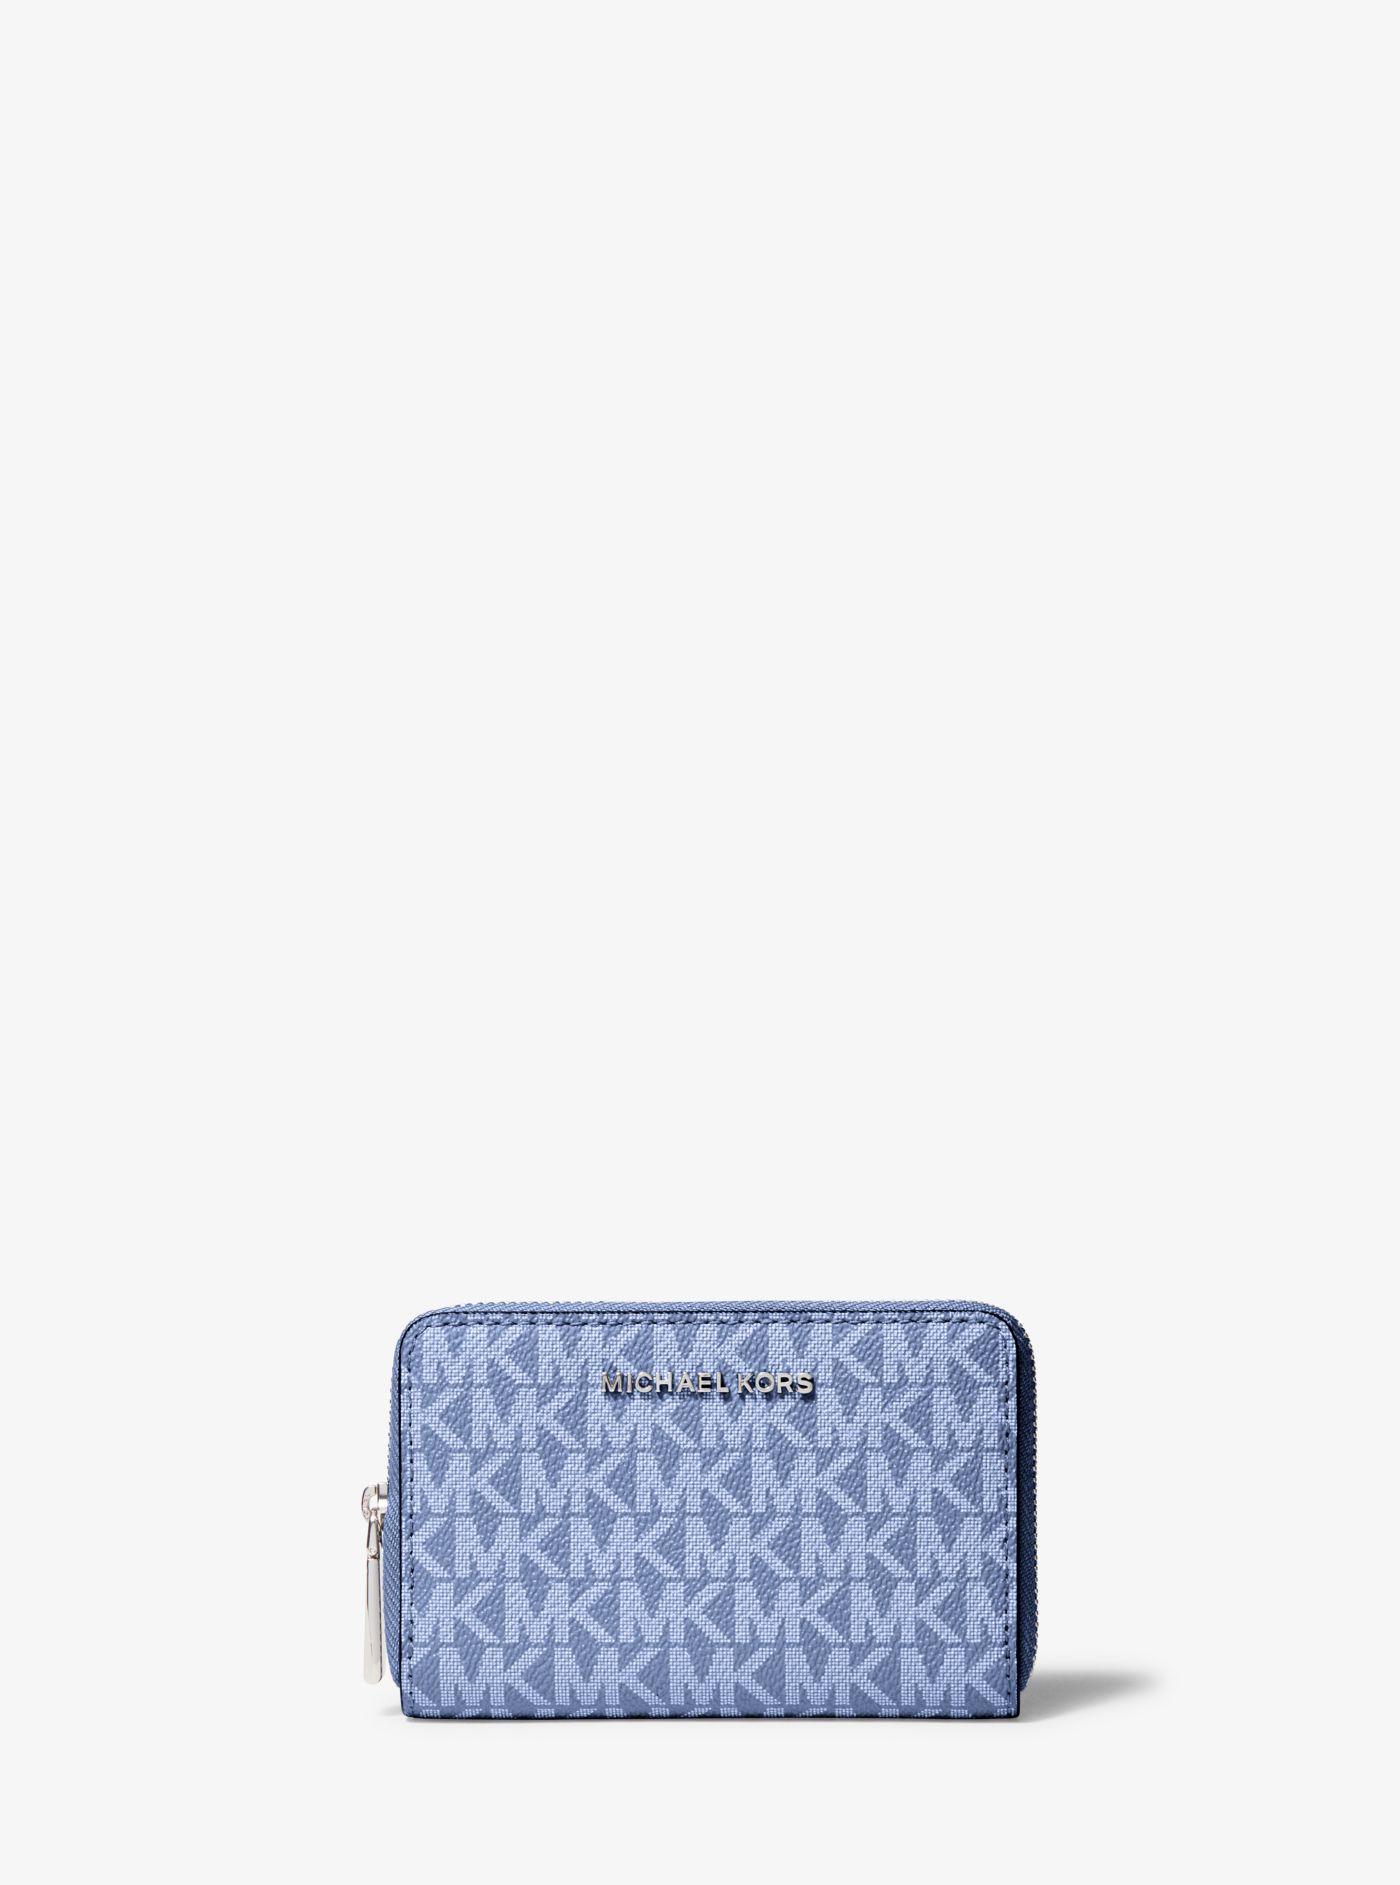 Michael Kors Small Monogram Zipped Wallet  Farfetch